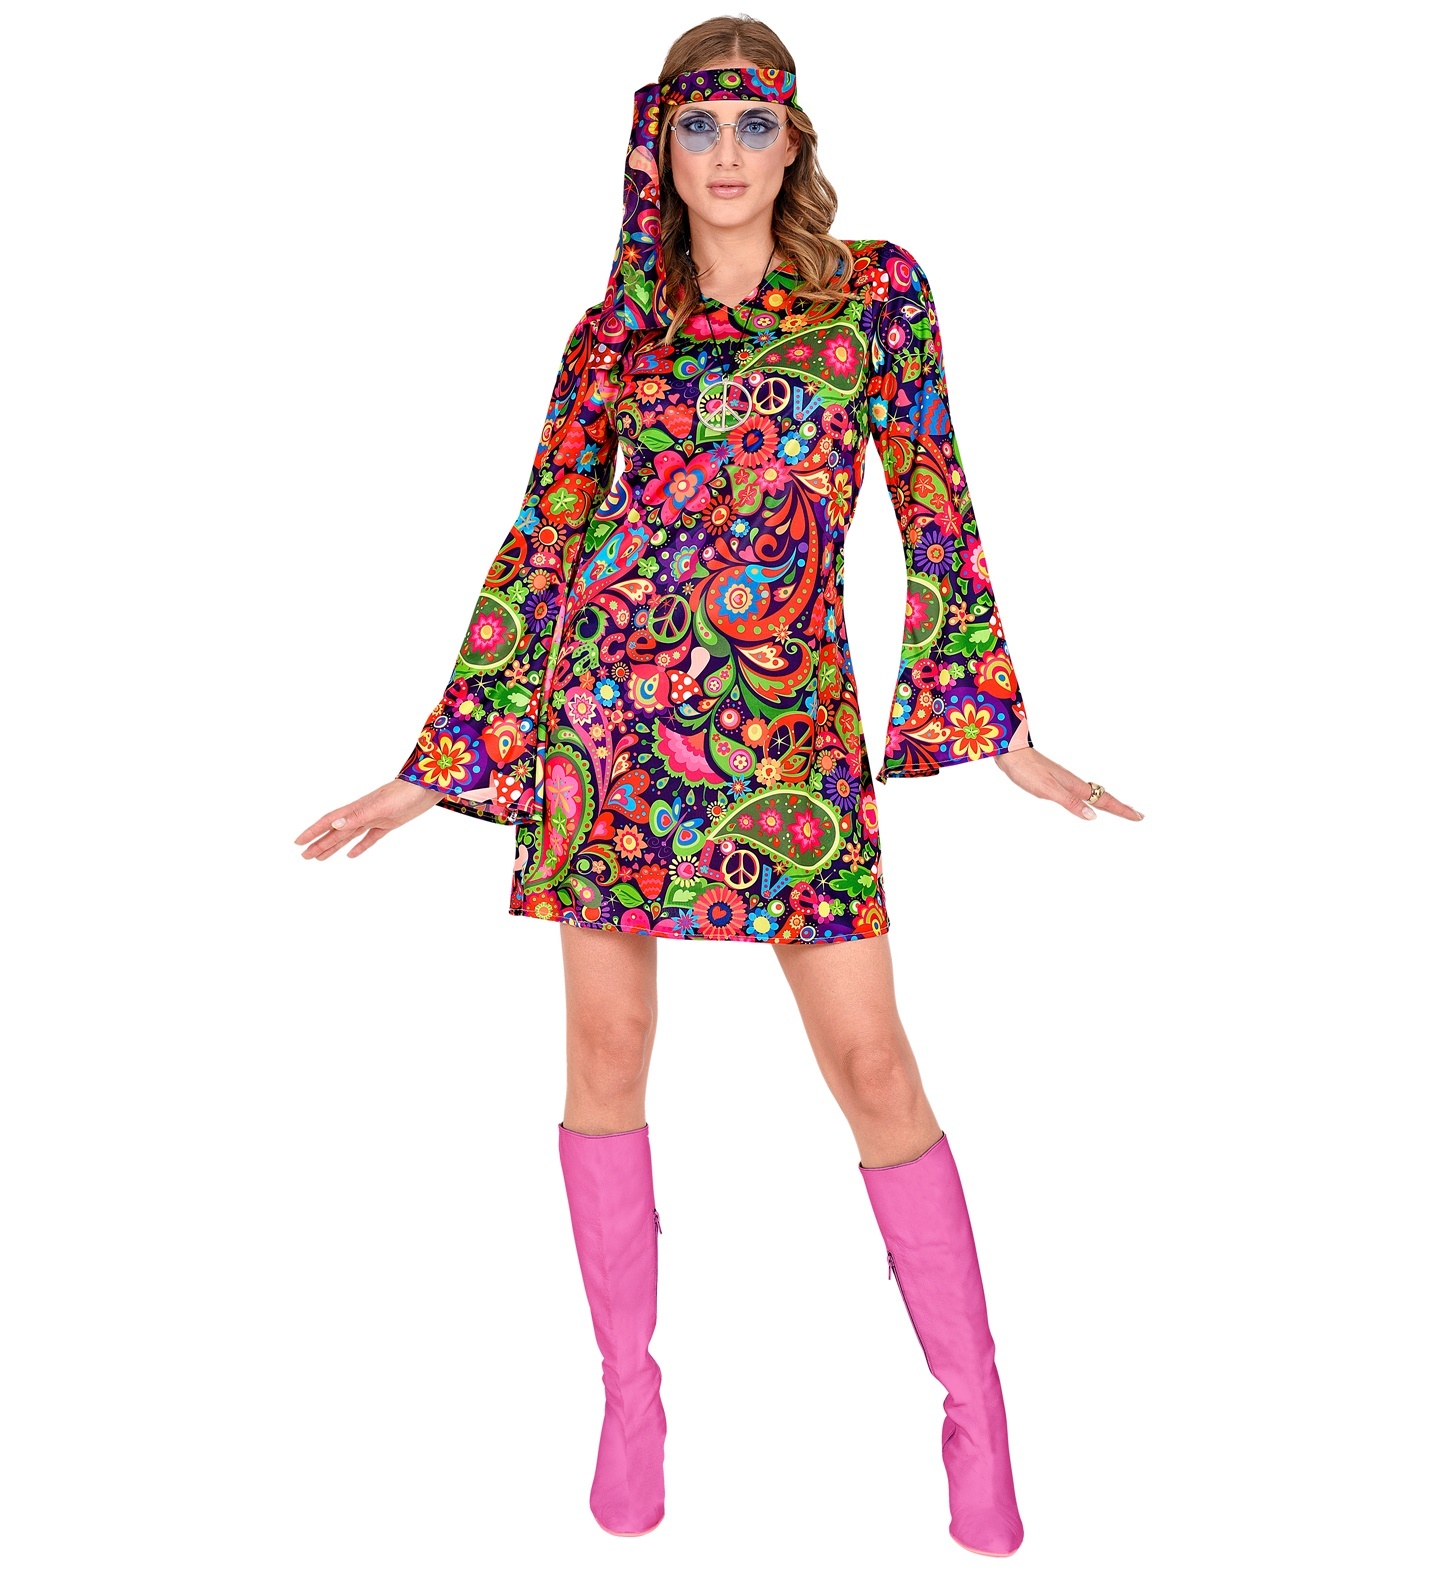 Widmann - Hippie Kostuum - Hippe Tante Anja Jaren 70 - Vrouw - multicolor - XS - Carnavalskleding - Verkleedkleding